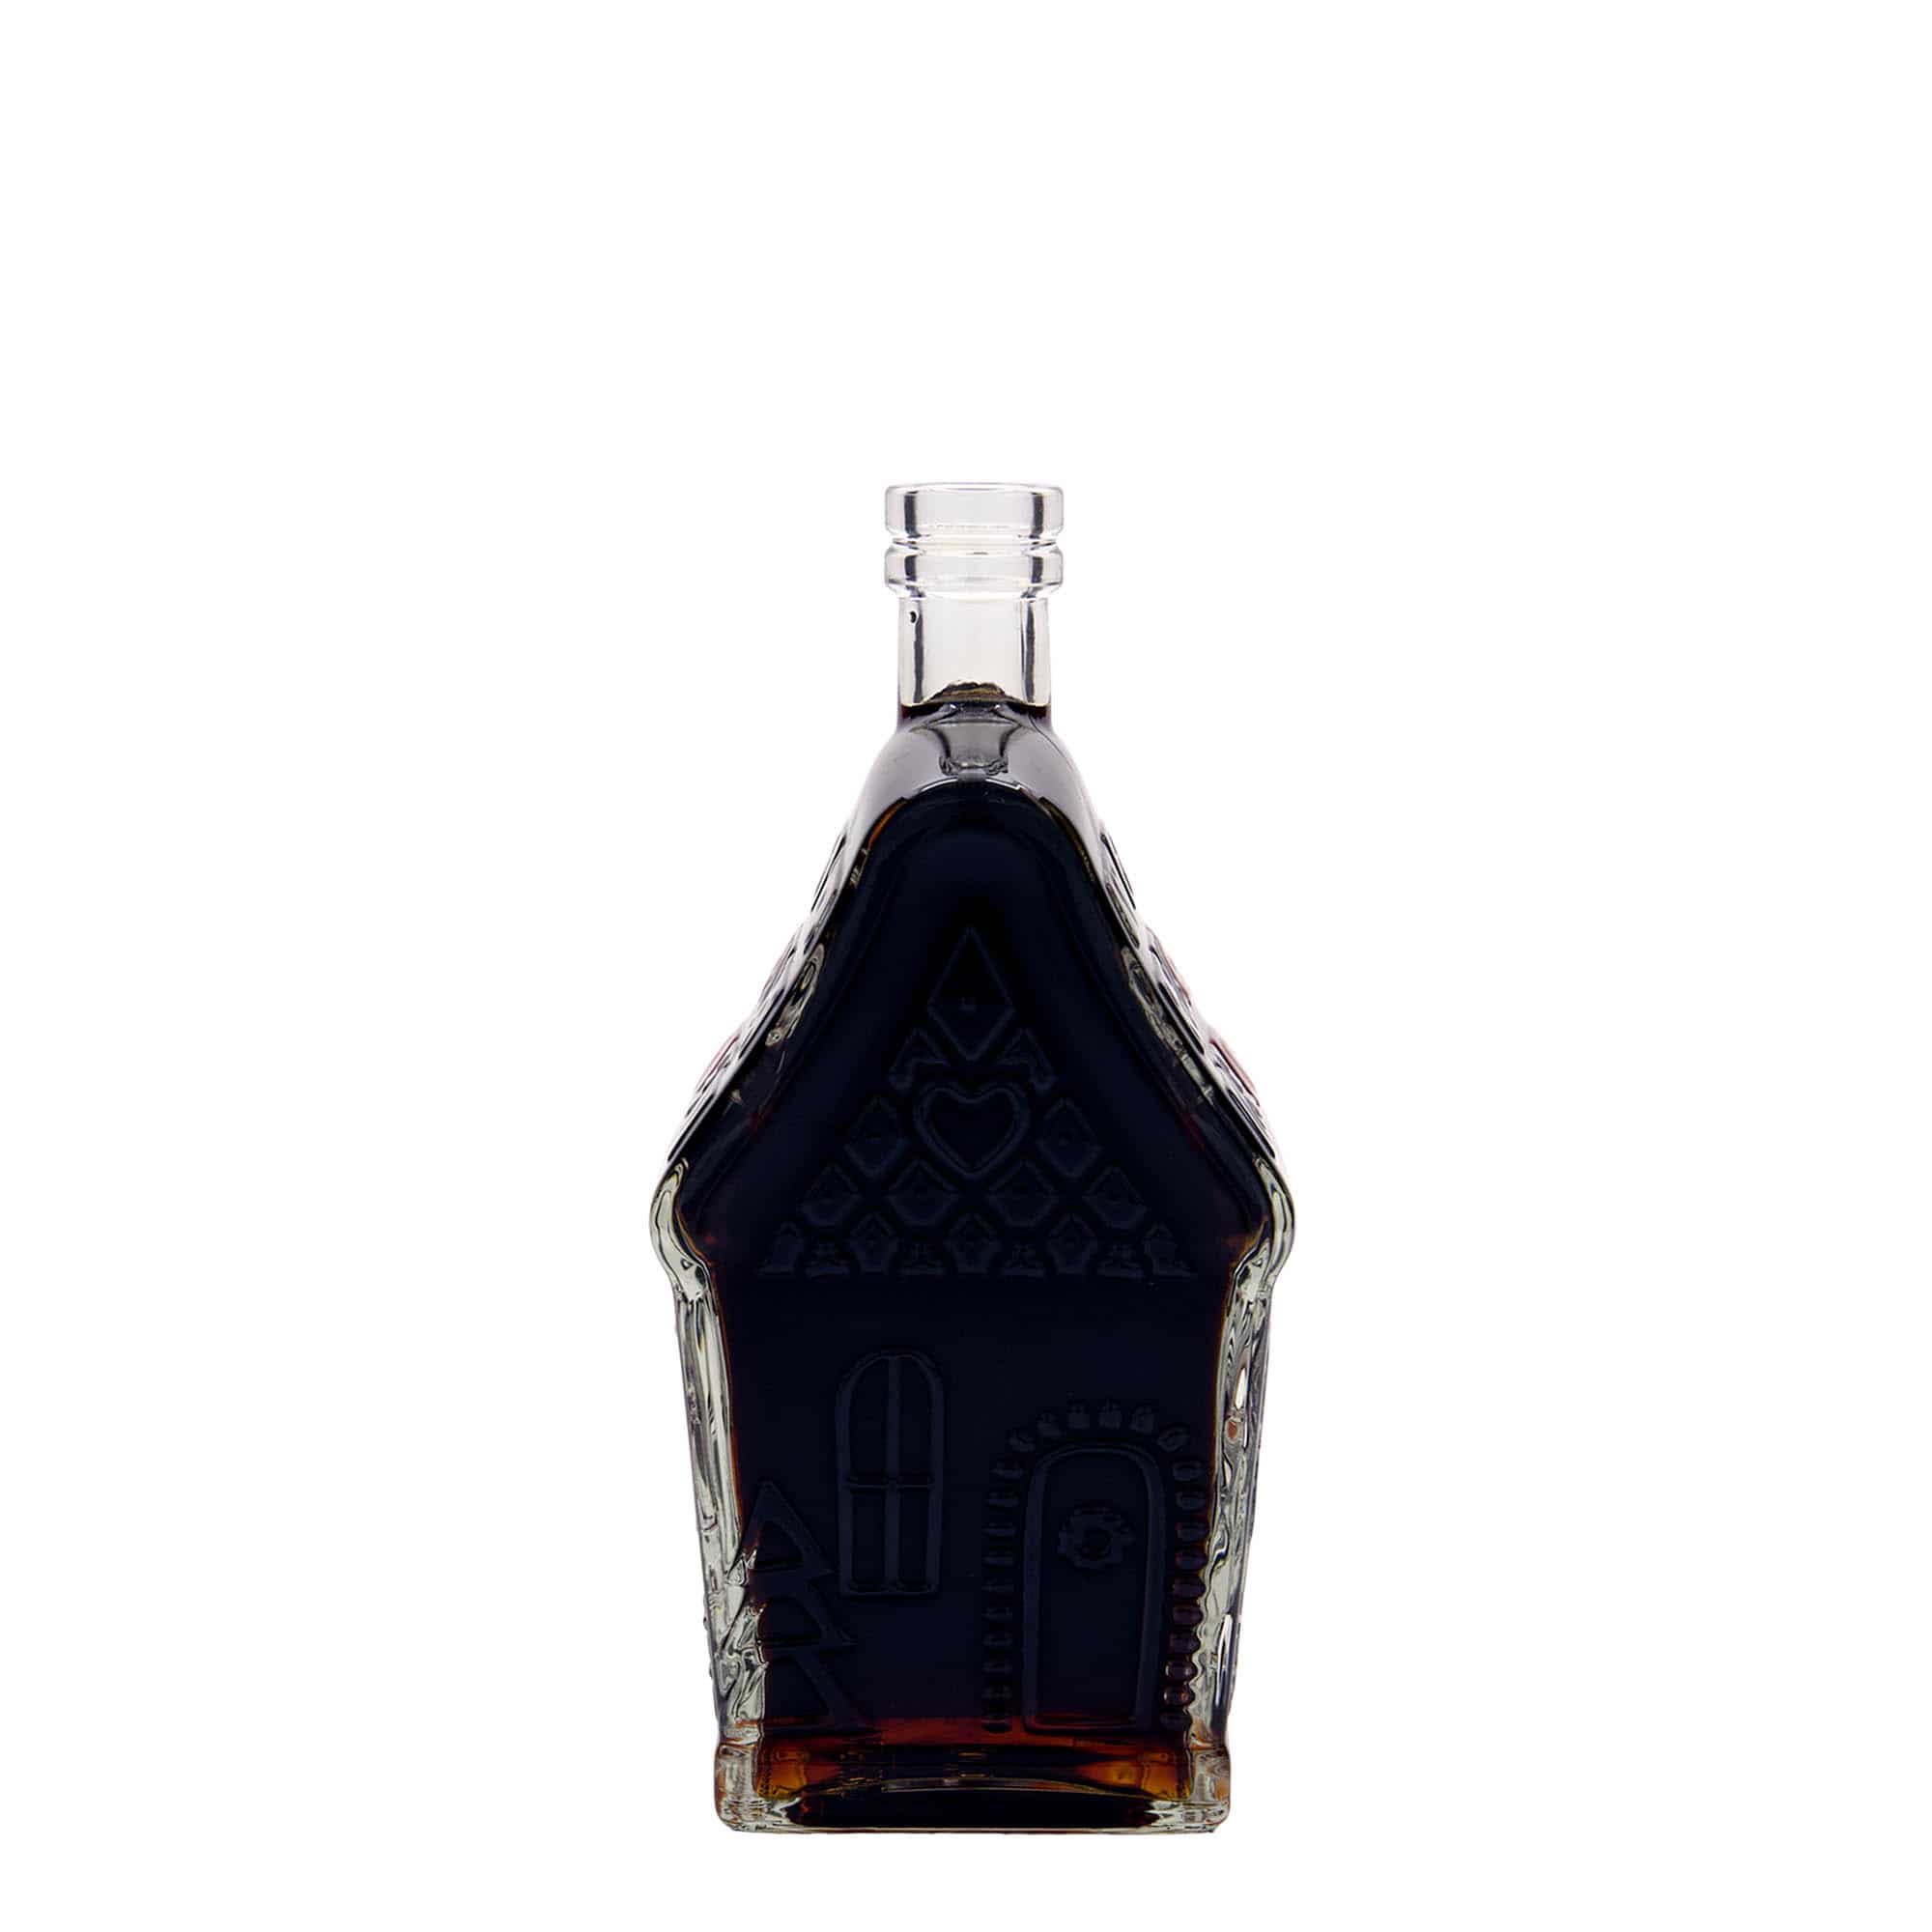 500 ml glass bottle 'Gingerbread House', rectangular, closure: cork